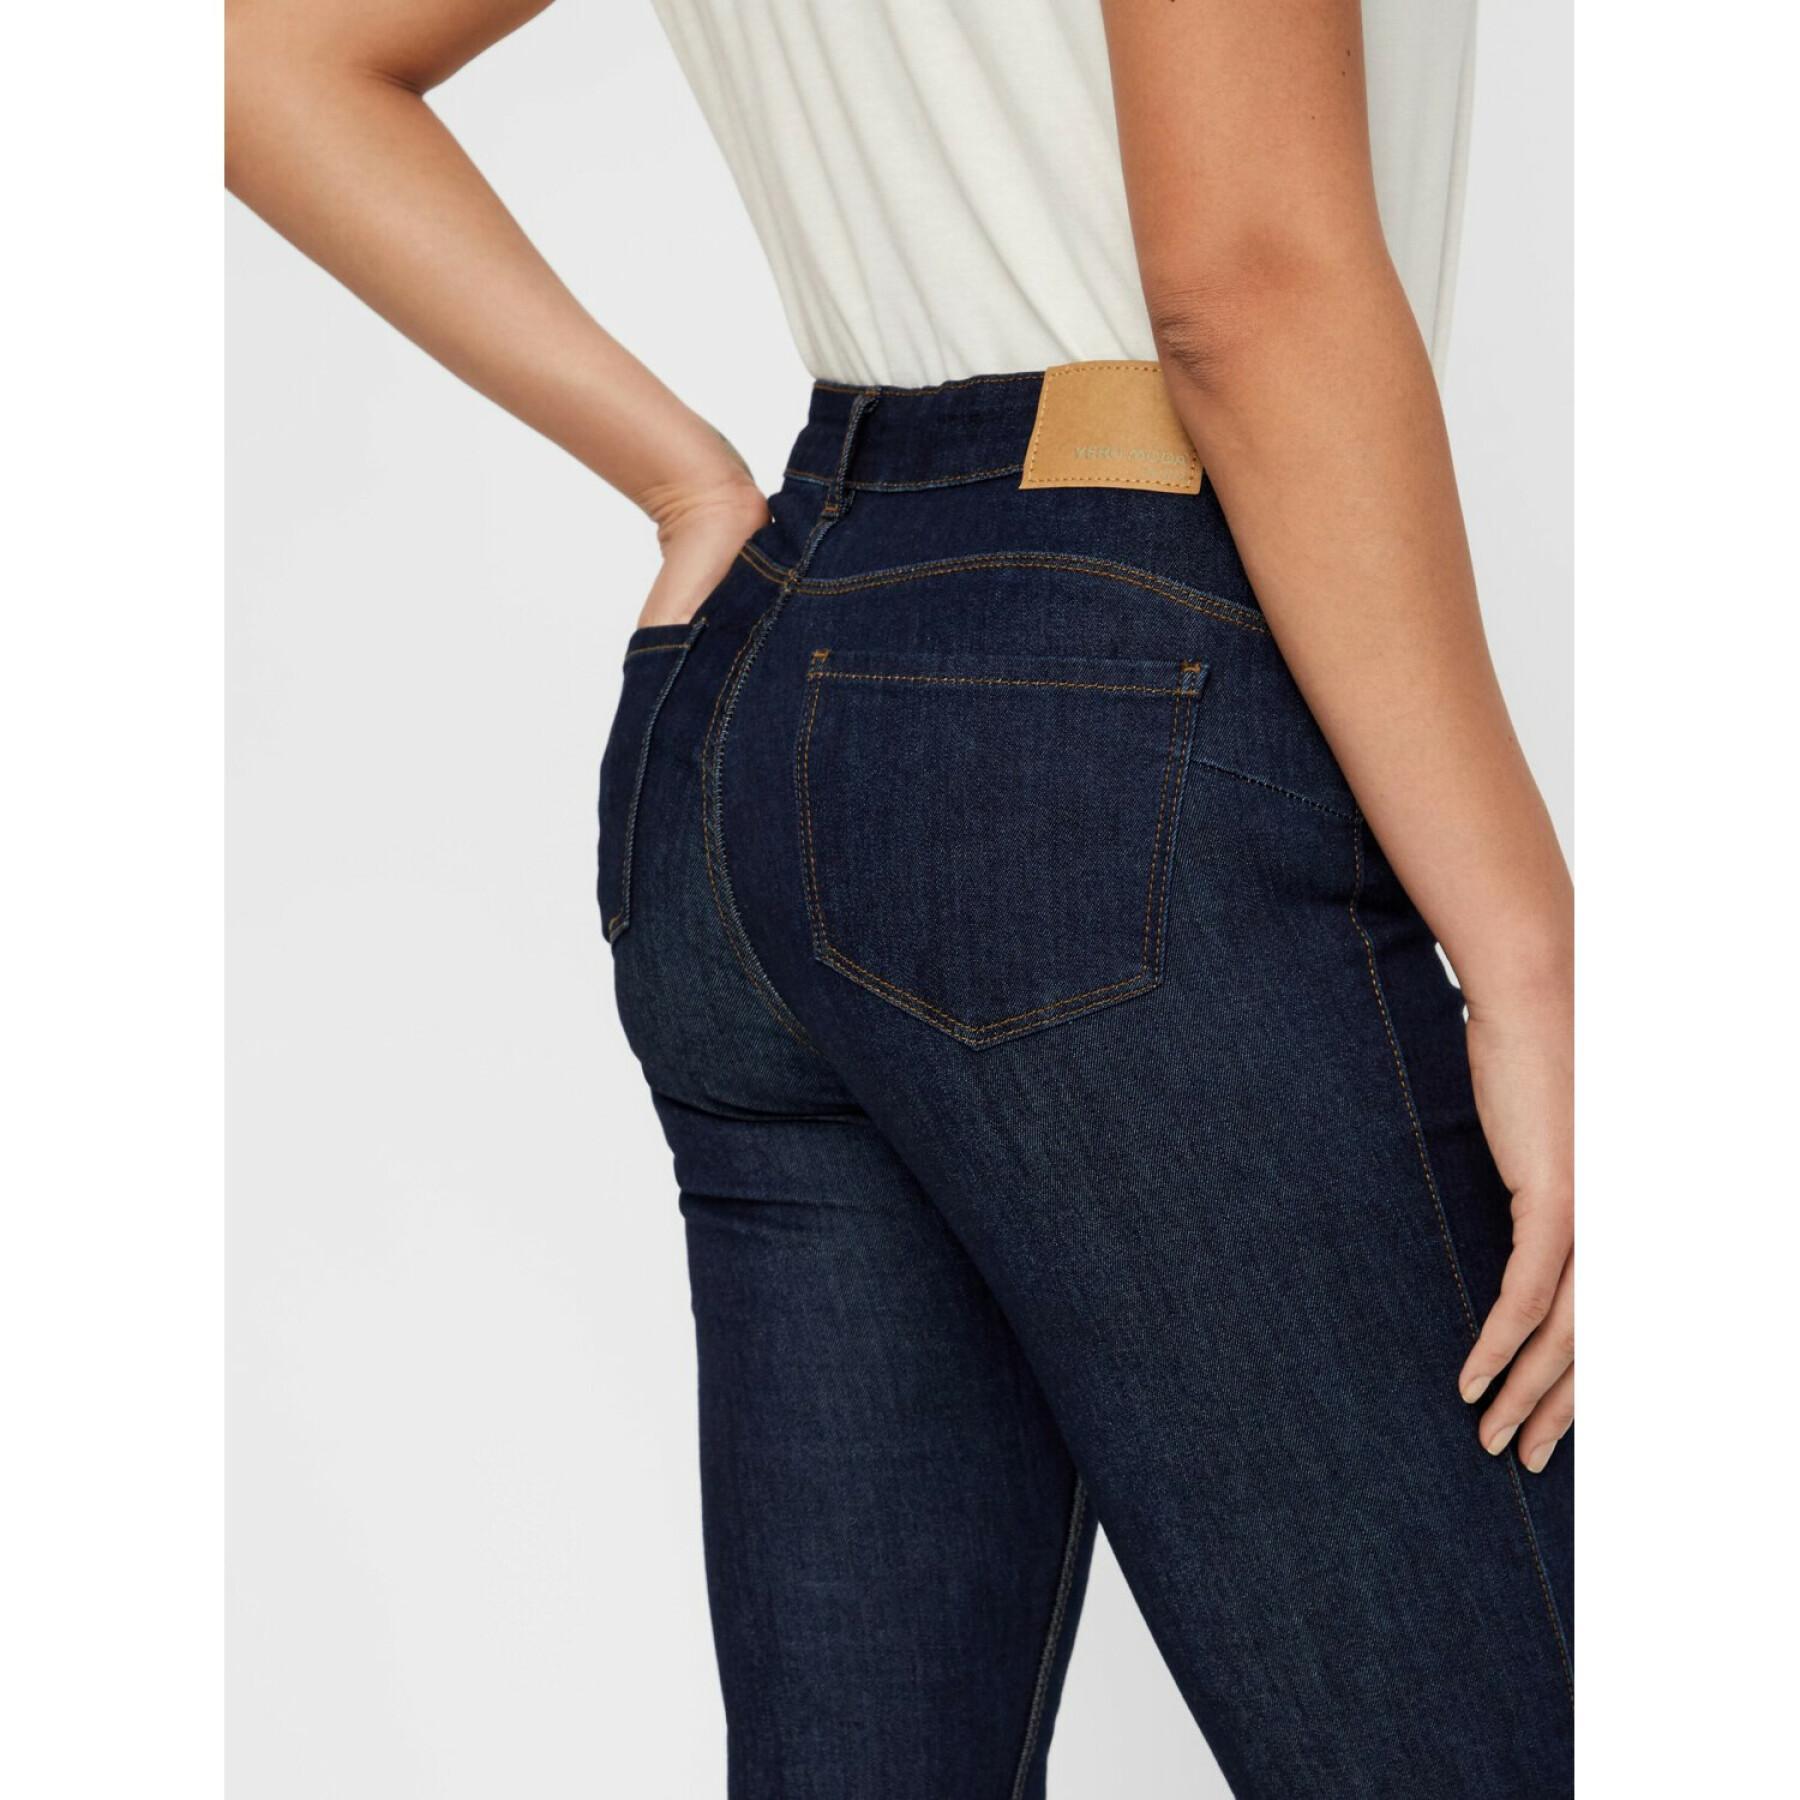 Women's jeans Vero Moda vmseven 500